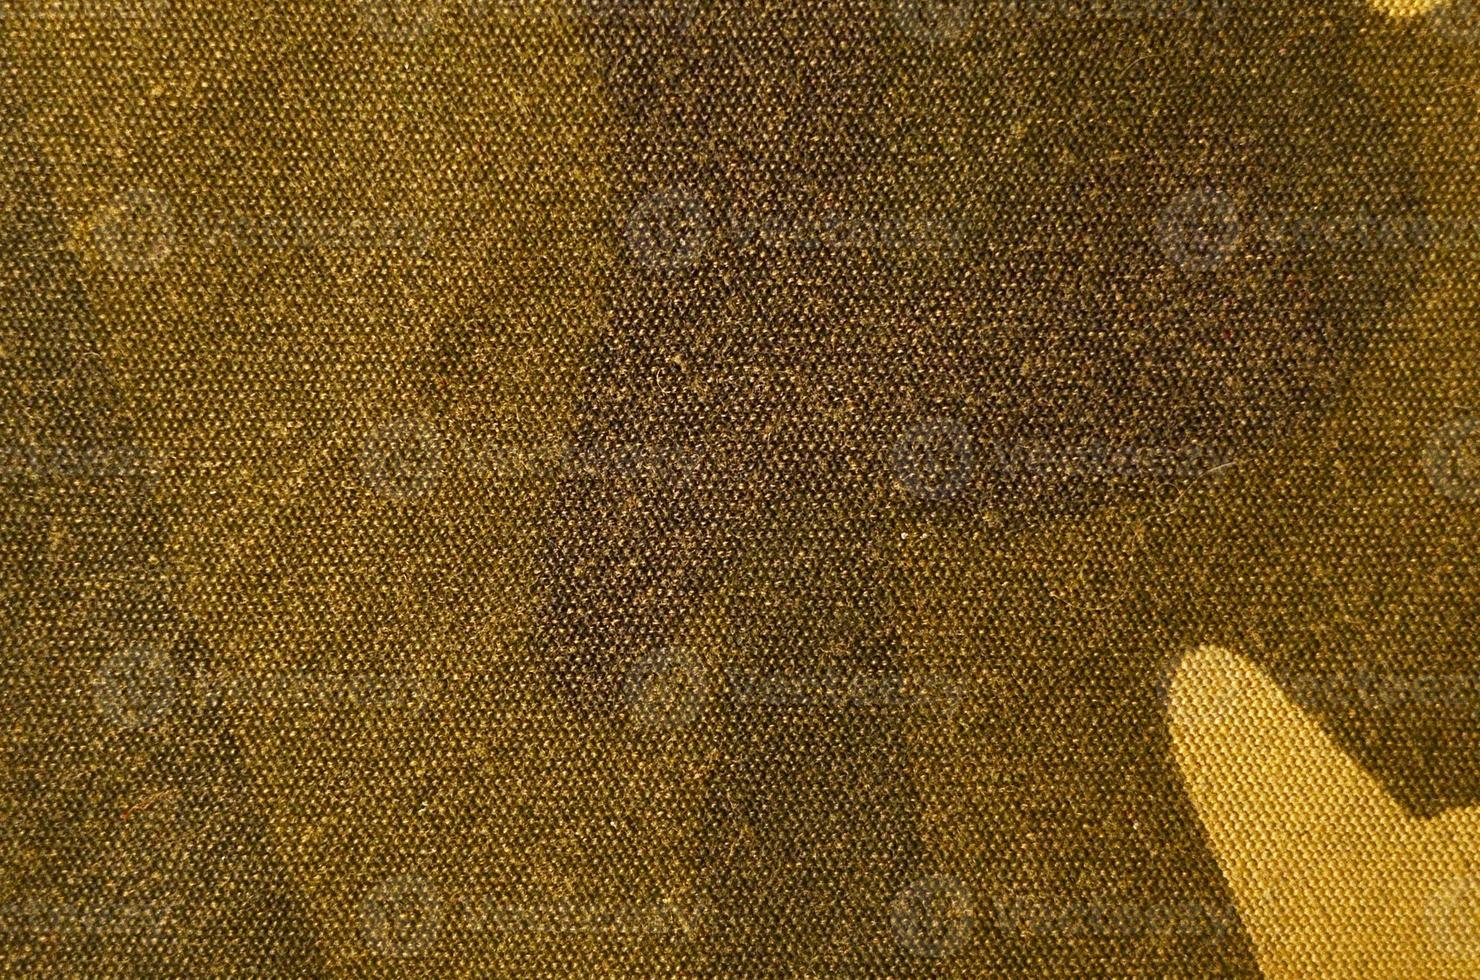 textil- kamouflage trasa textur foto